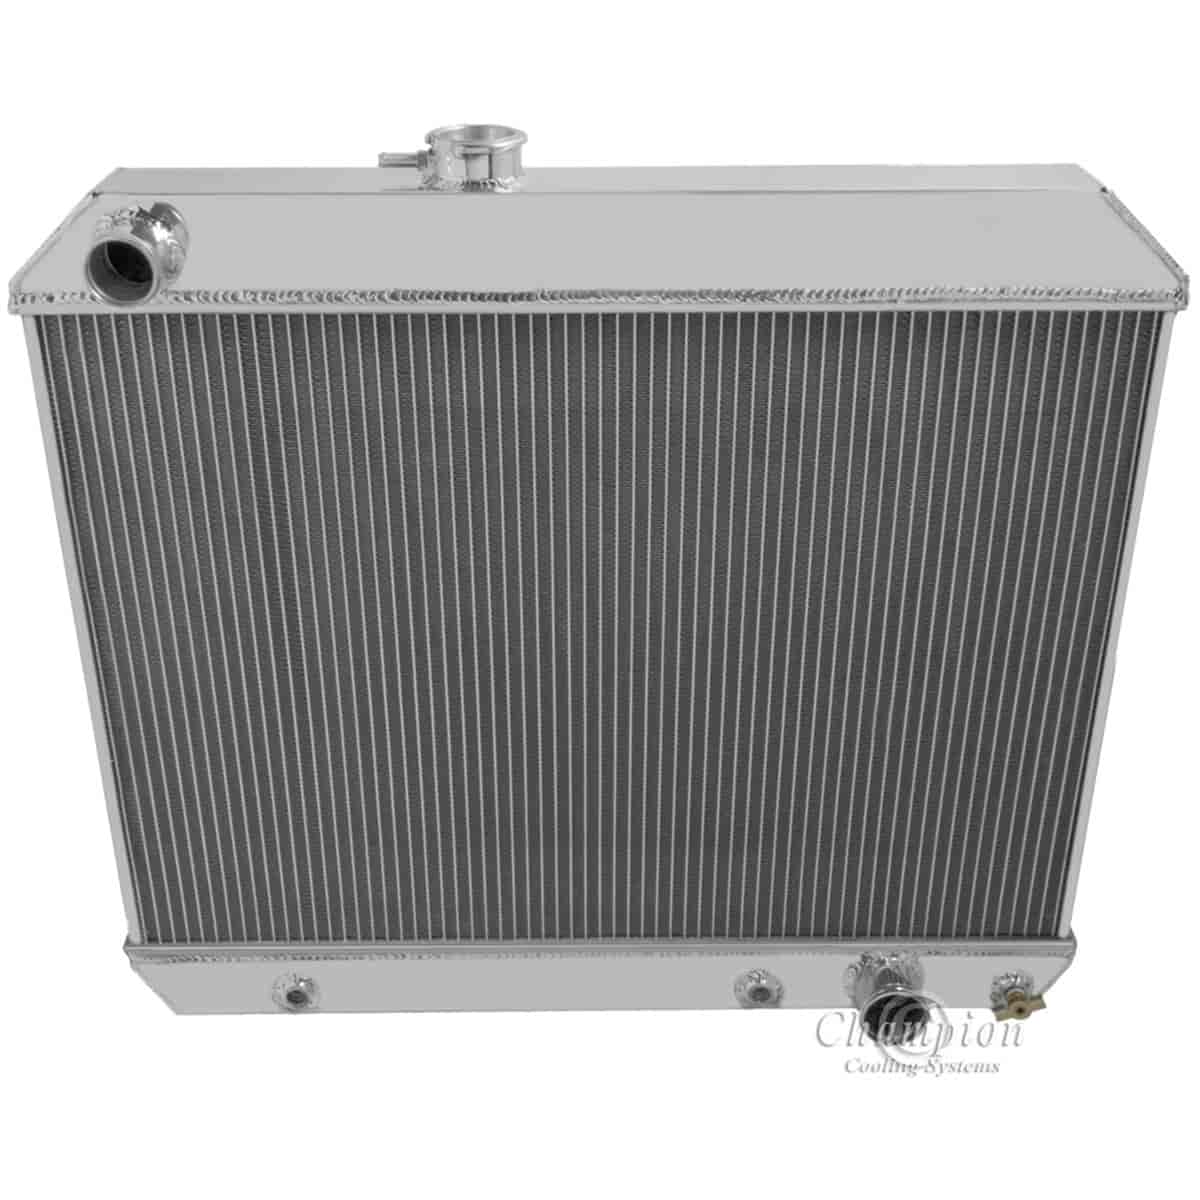 Monster Cooling-Series All-Aluminum Radiator for Pontiac GTO/LeMans/Tempest